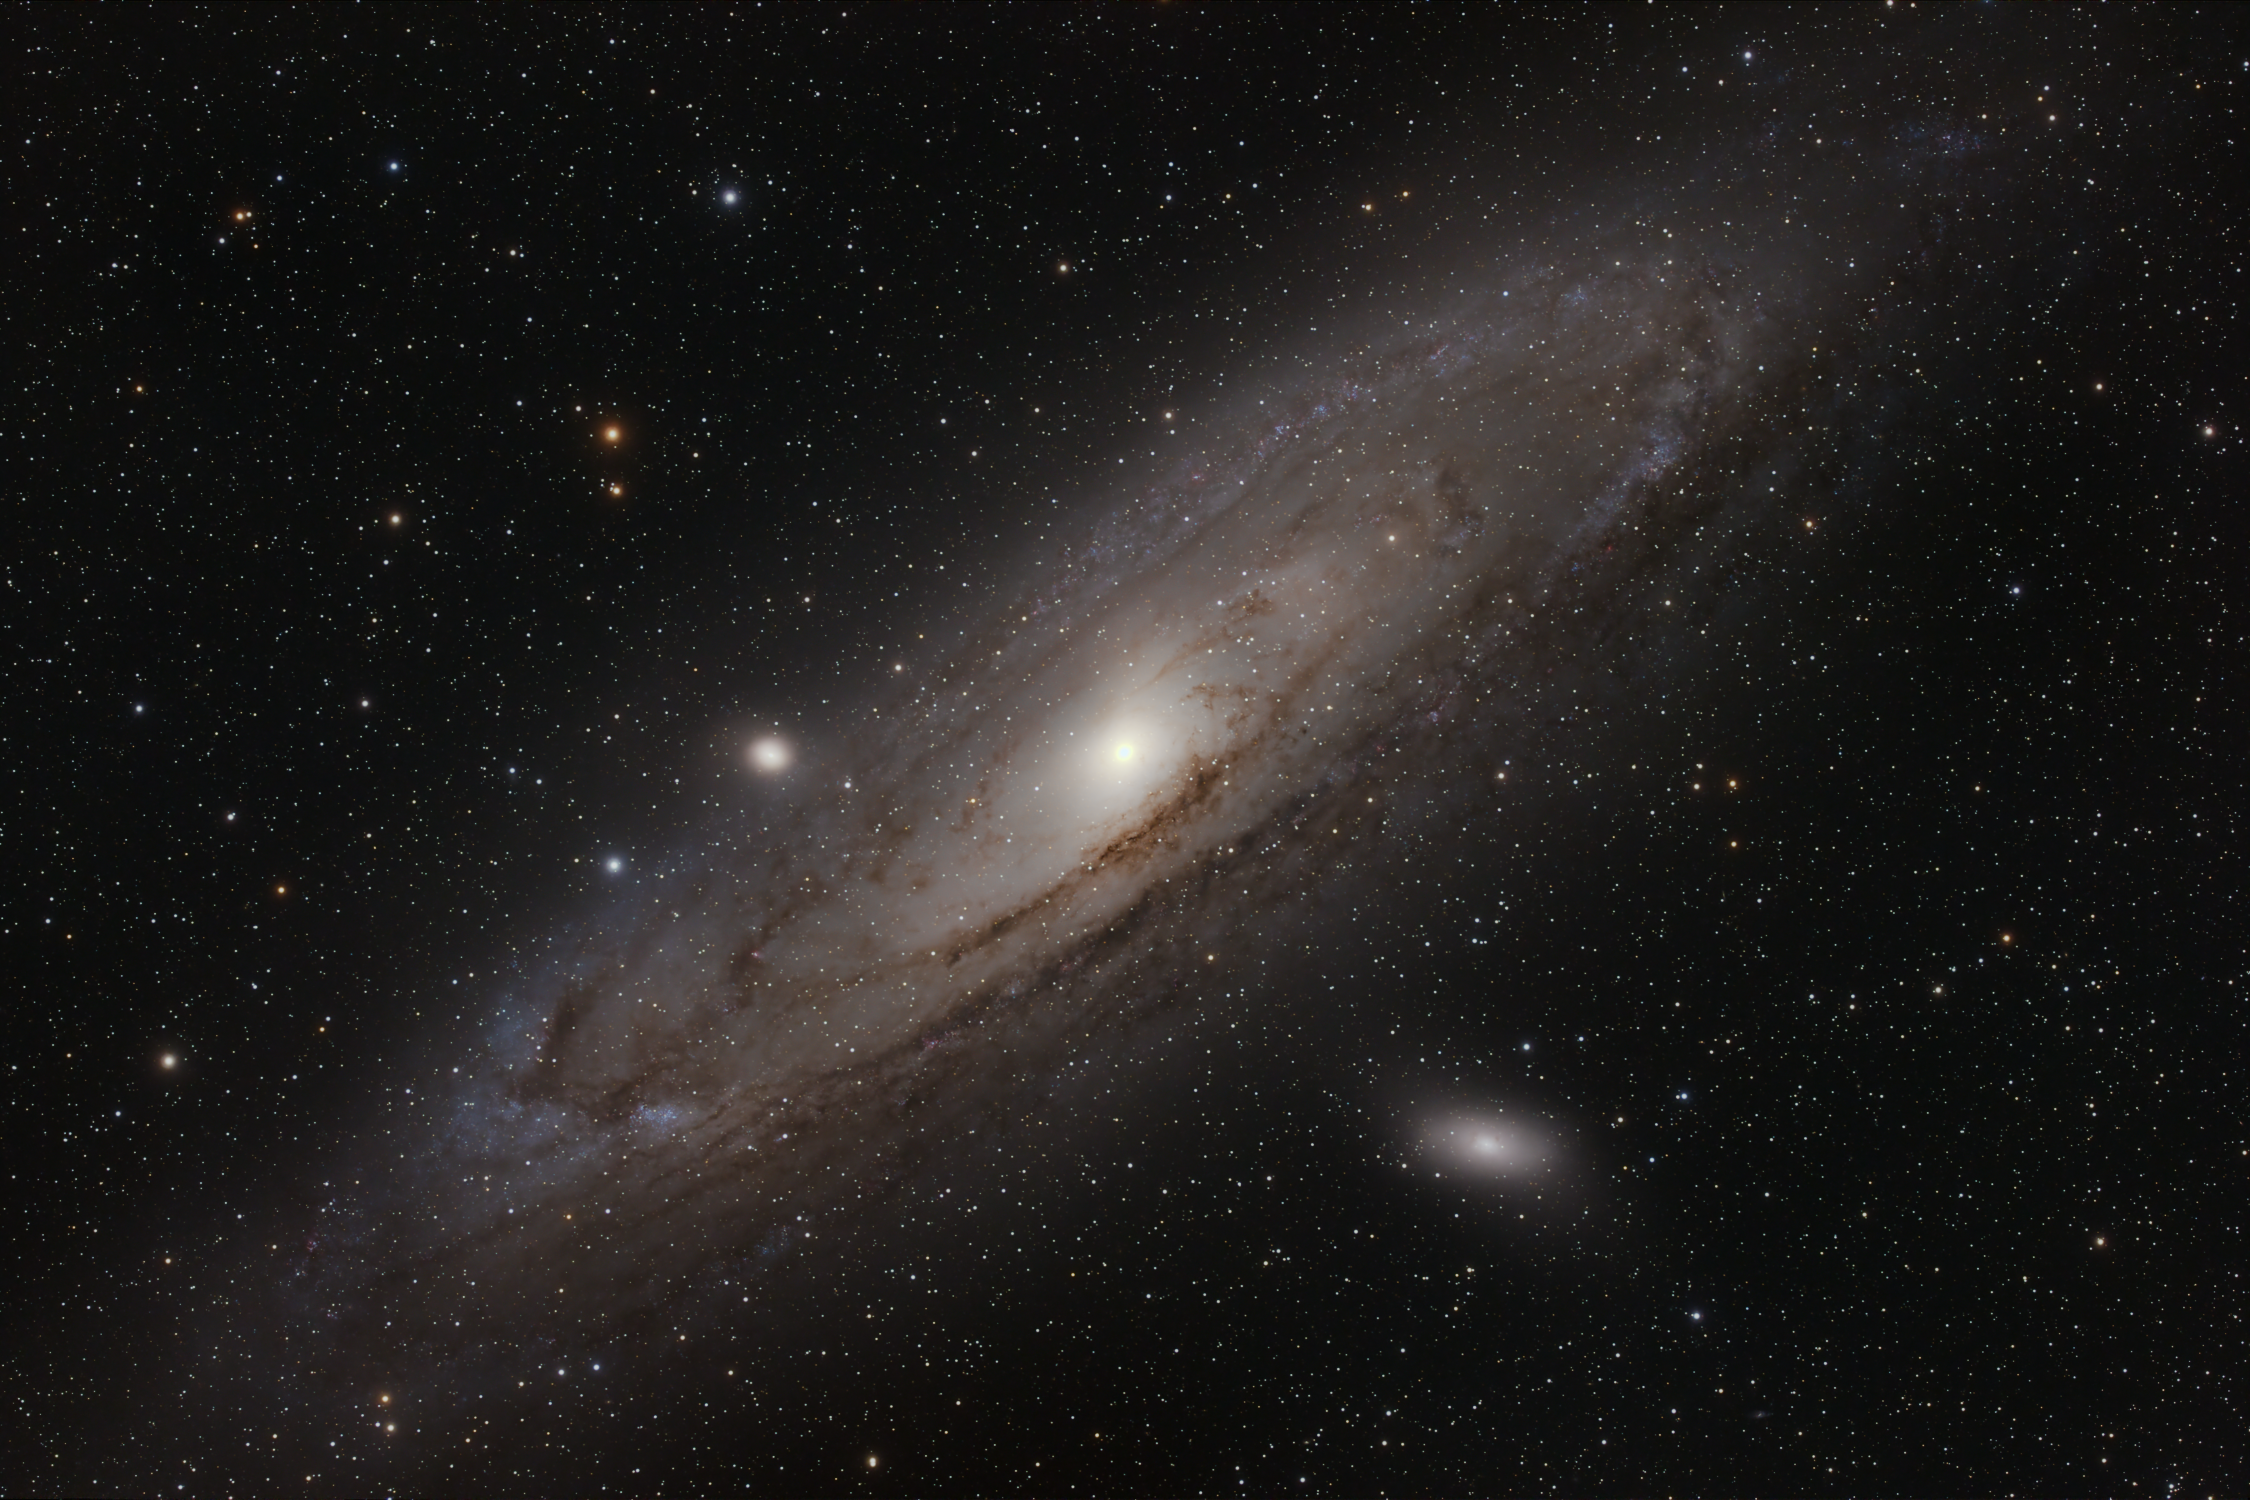 M31 in Andromeda, the Andromeda Galaxy